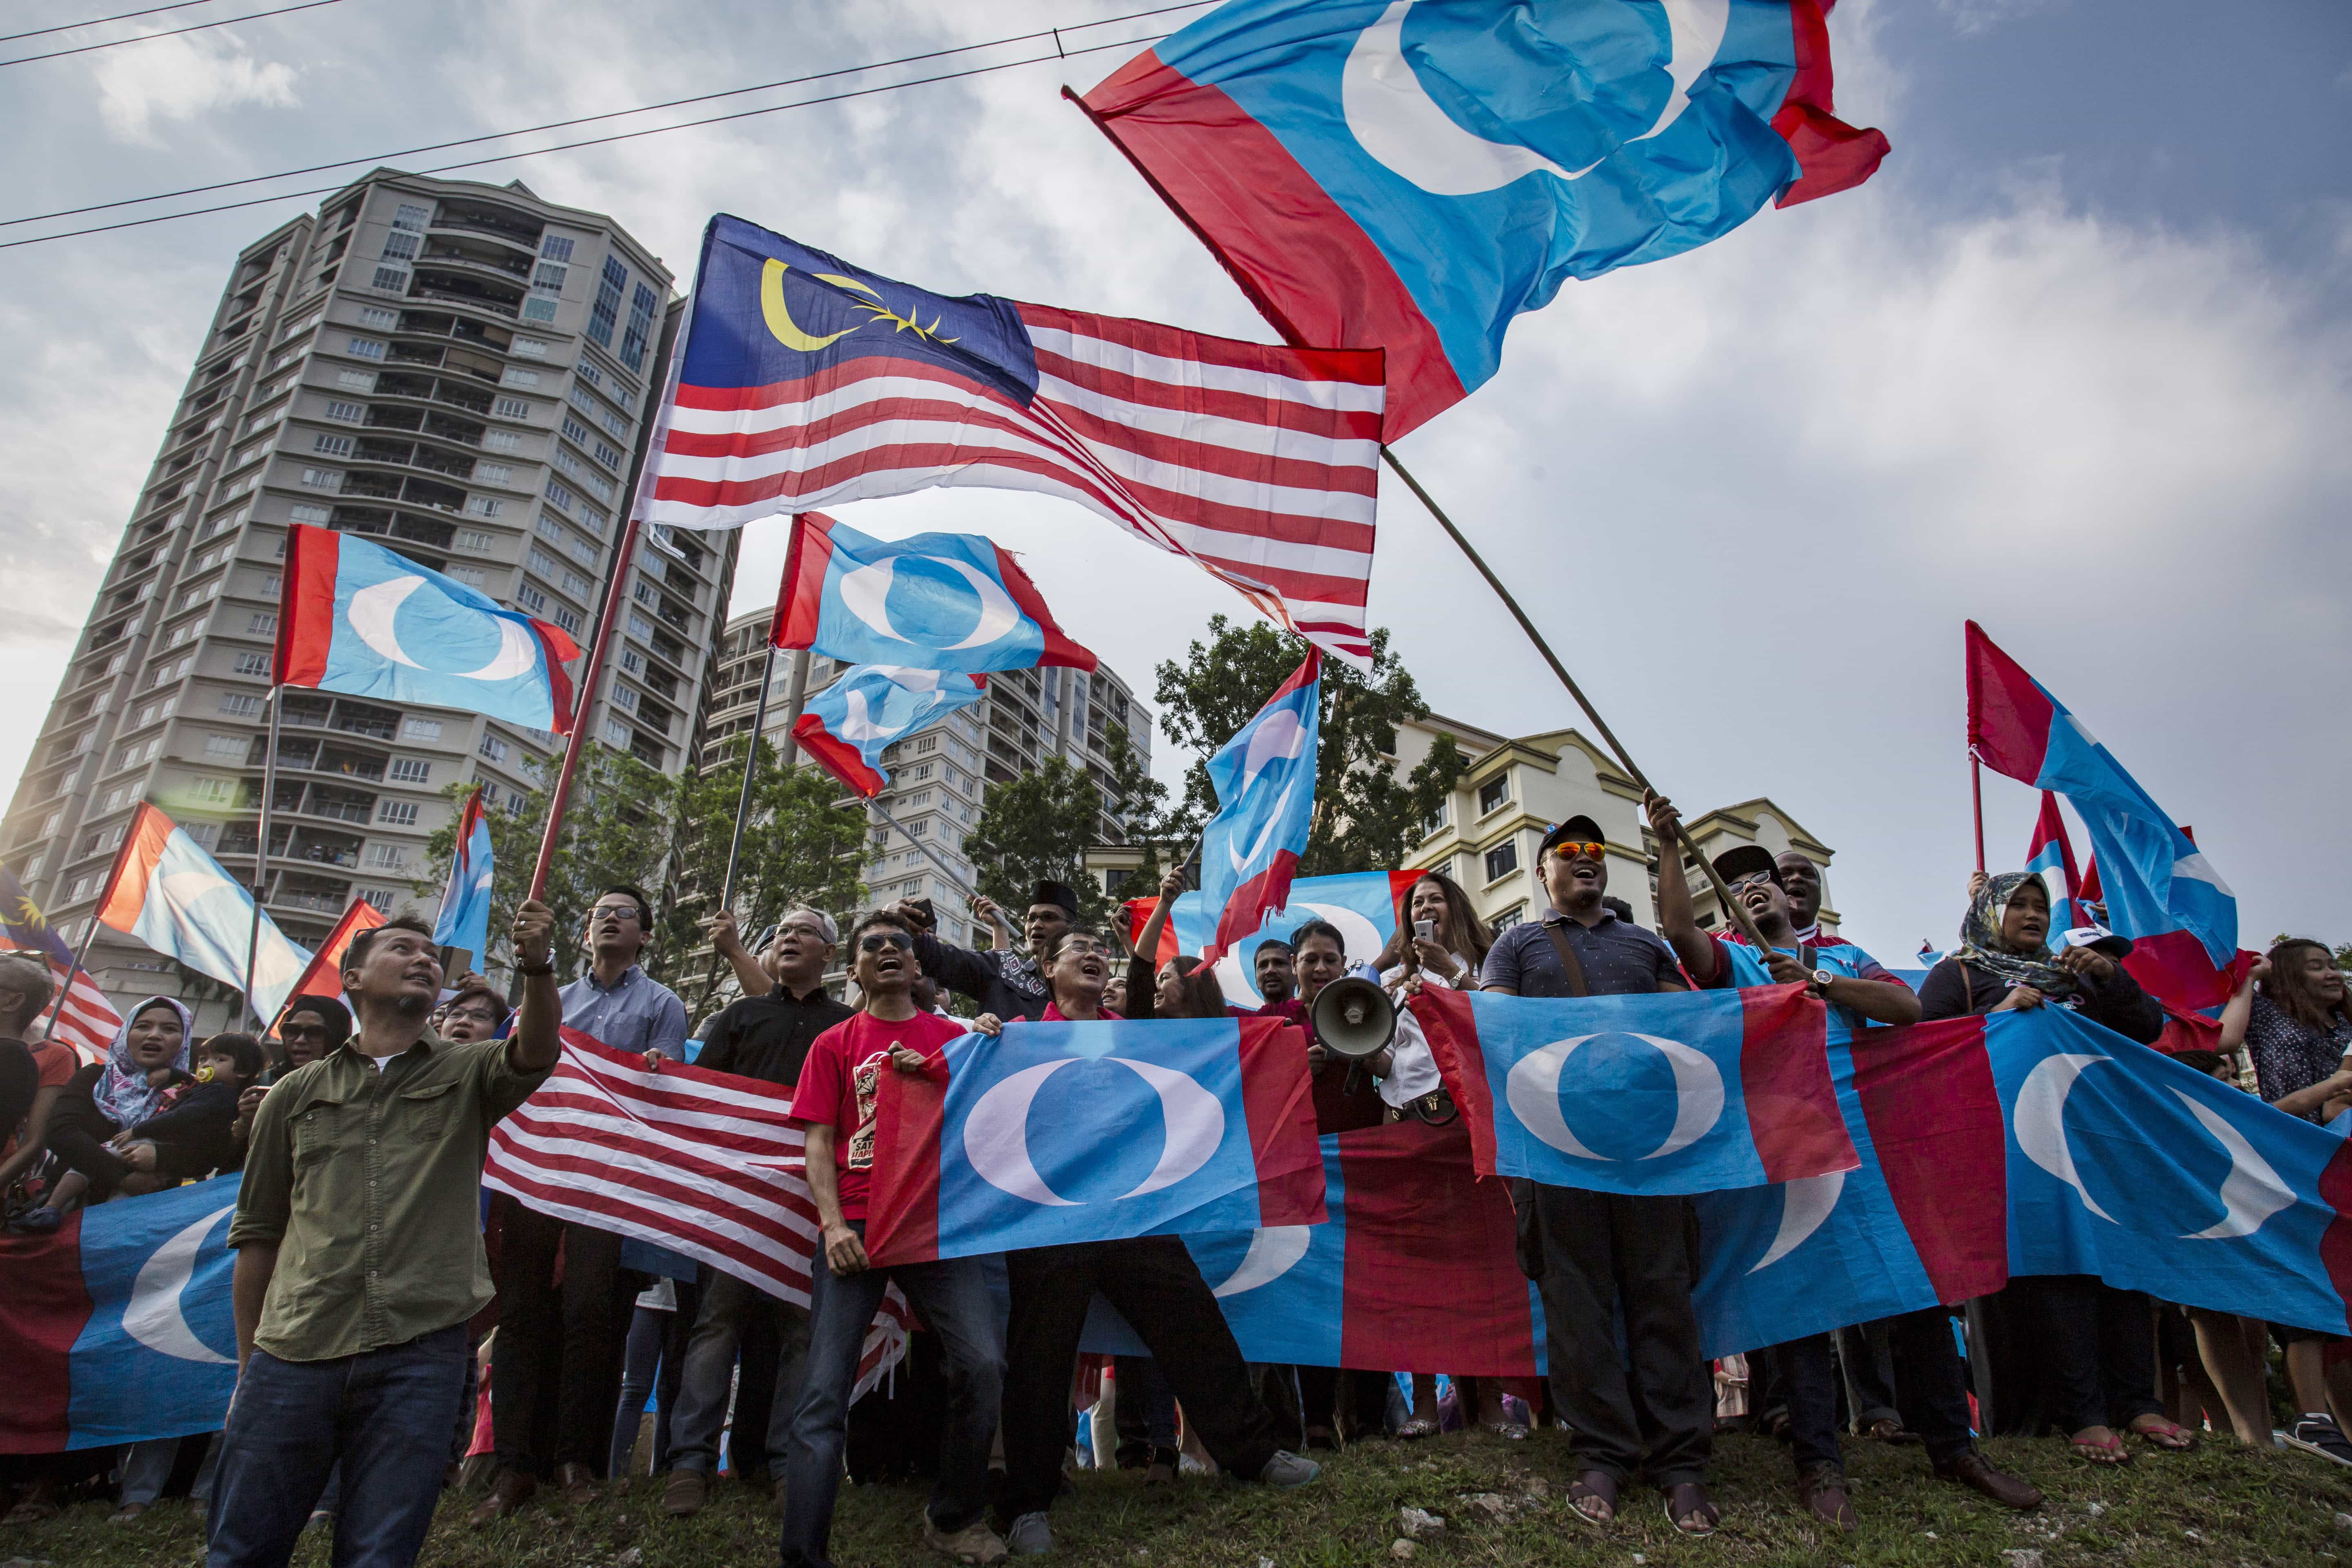 Supporters of 'Pakatan Harapan' rally following election victory, Kuala Lumpur, Malaysia, 10 May 2018, Ulet Ifansasti/Getty Images